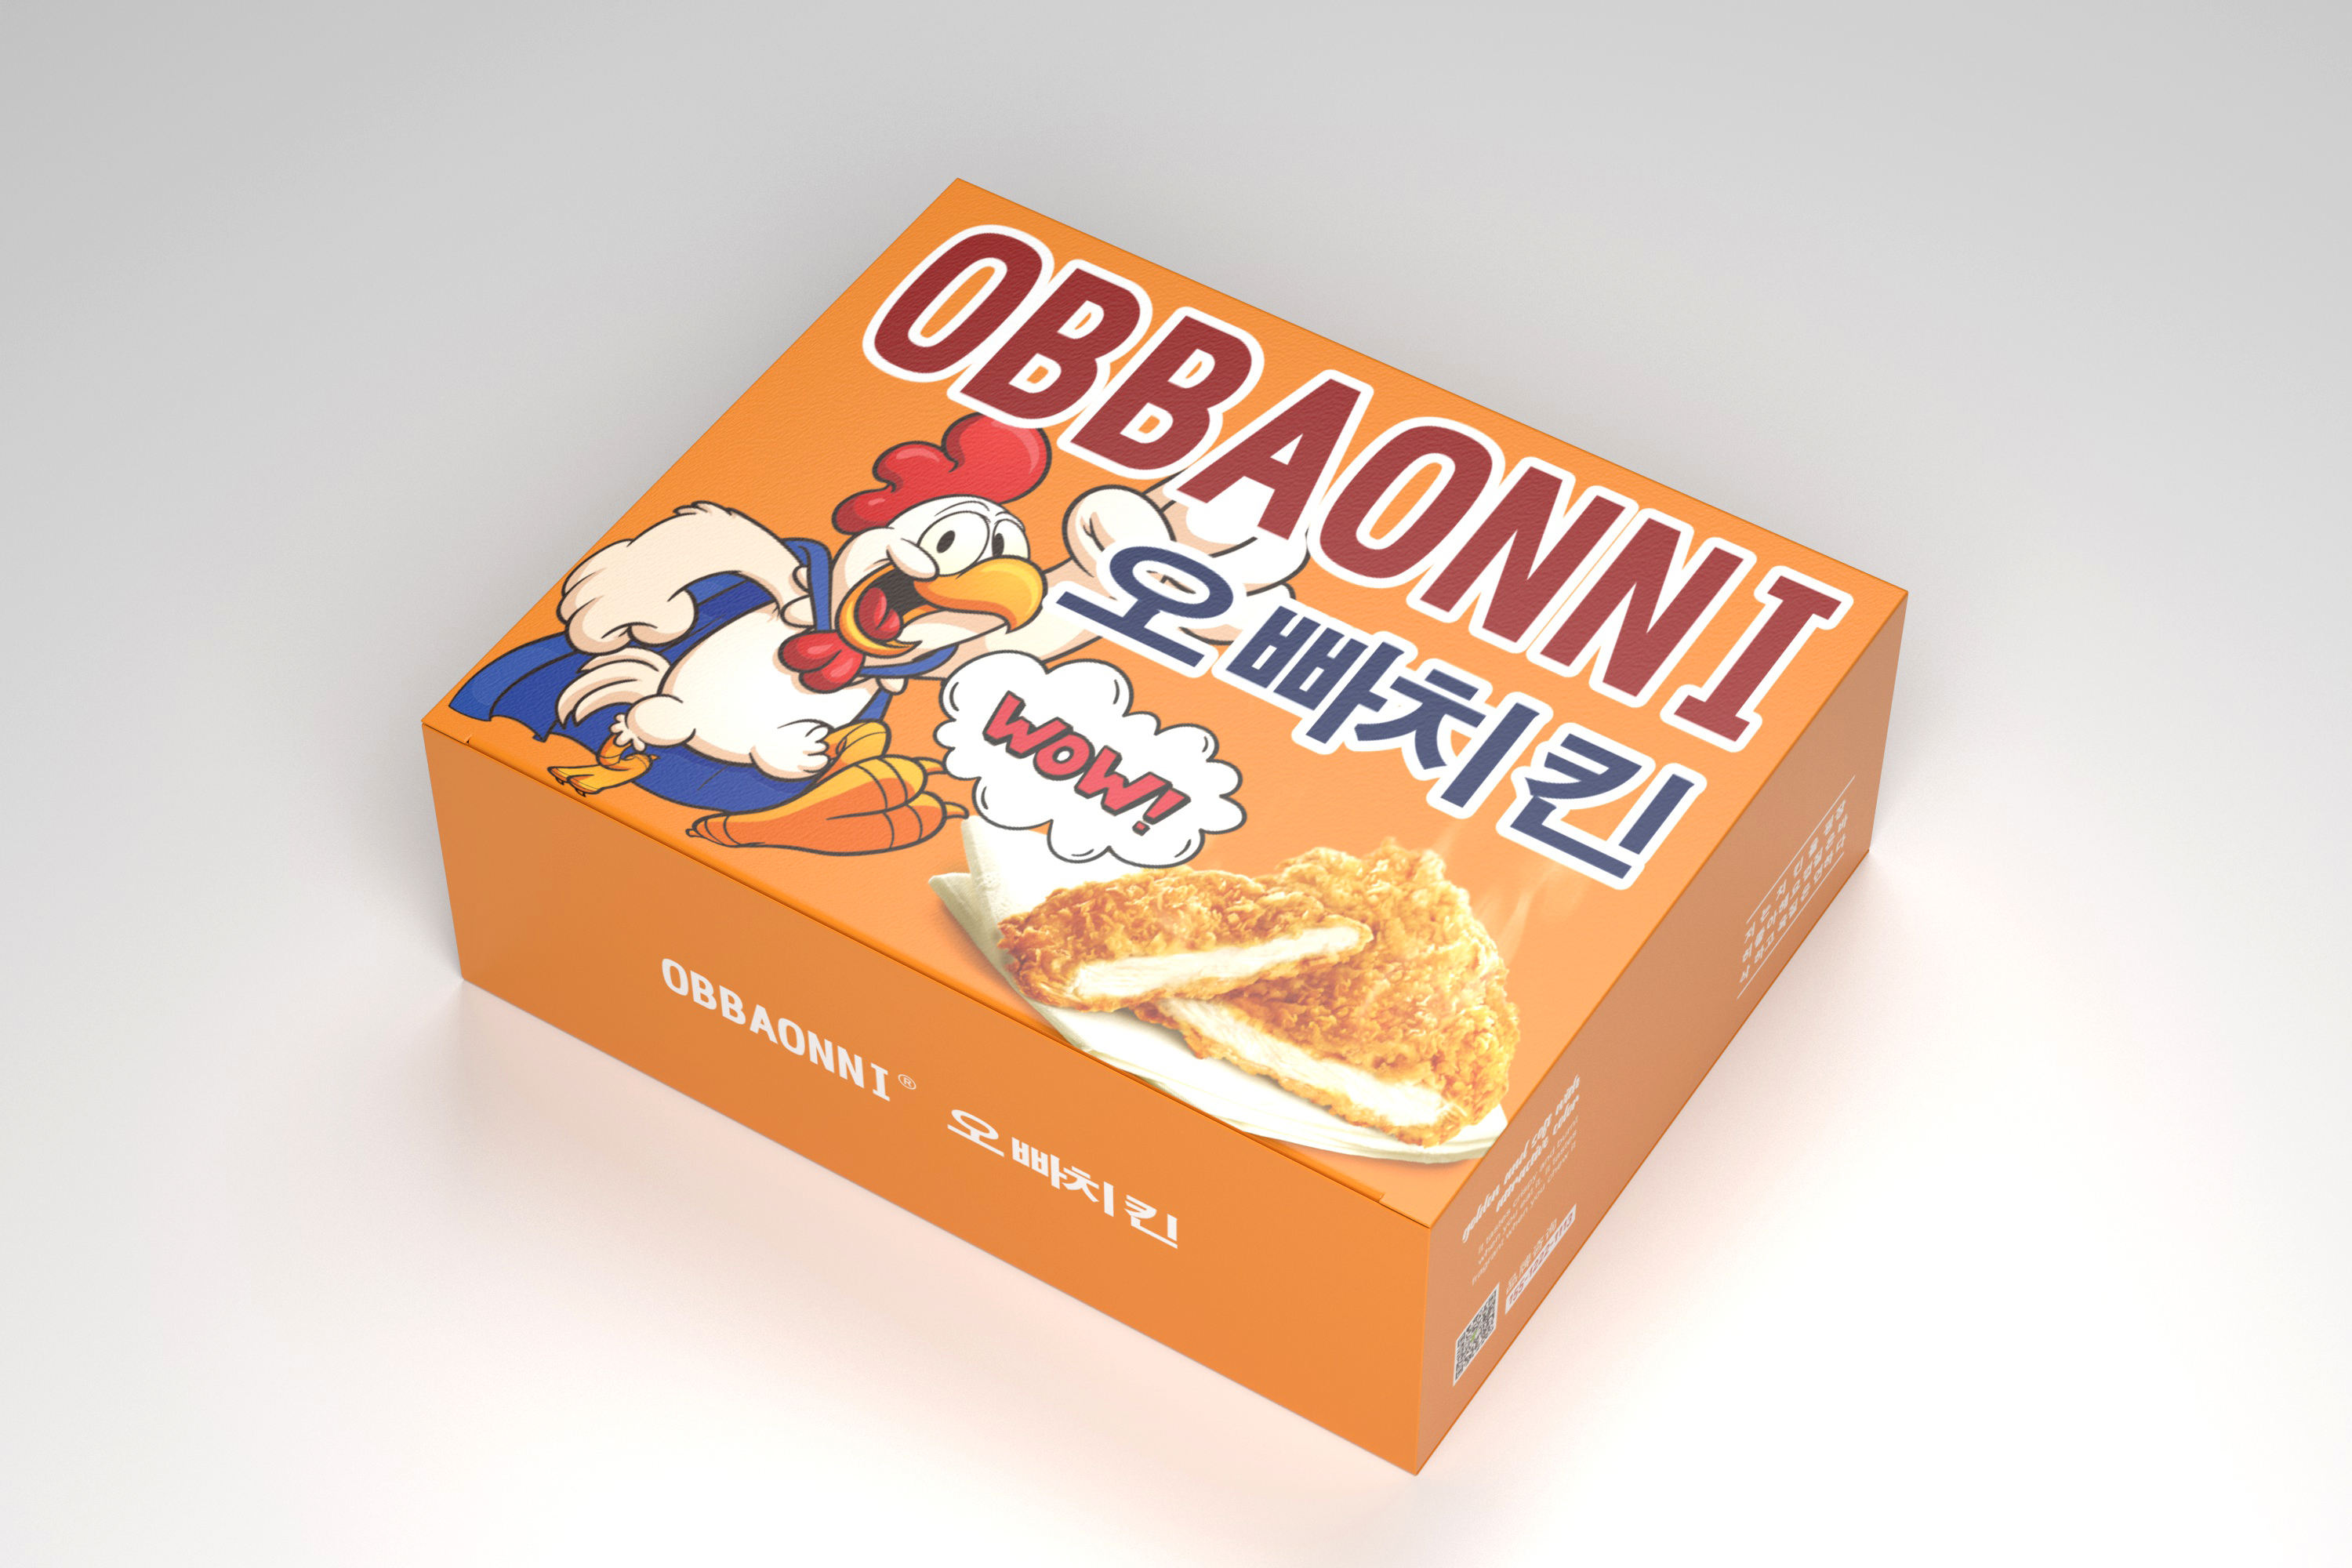 obbaonni炸鸡包装盒设计 食品包装设计 飞特网 飞特(fevte)